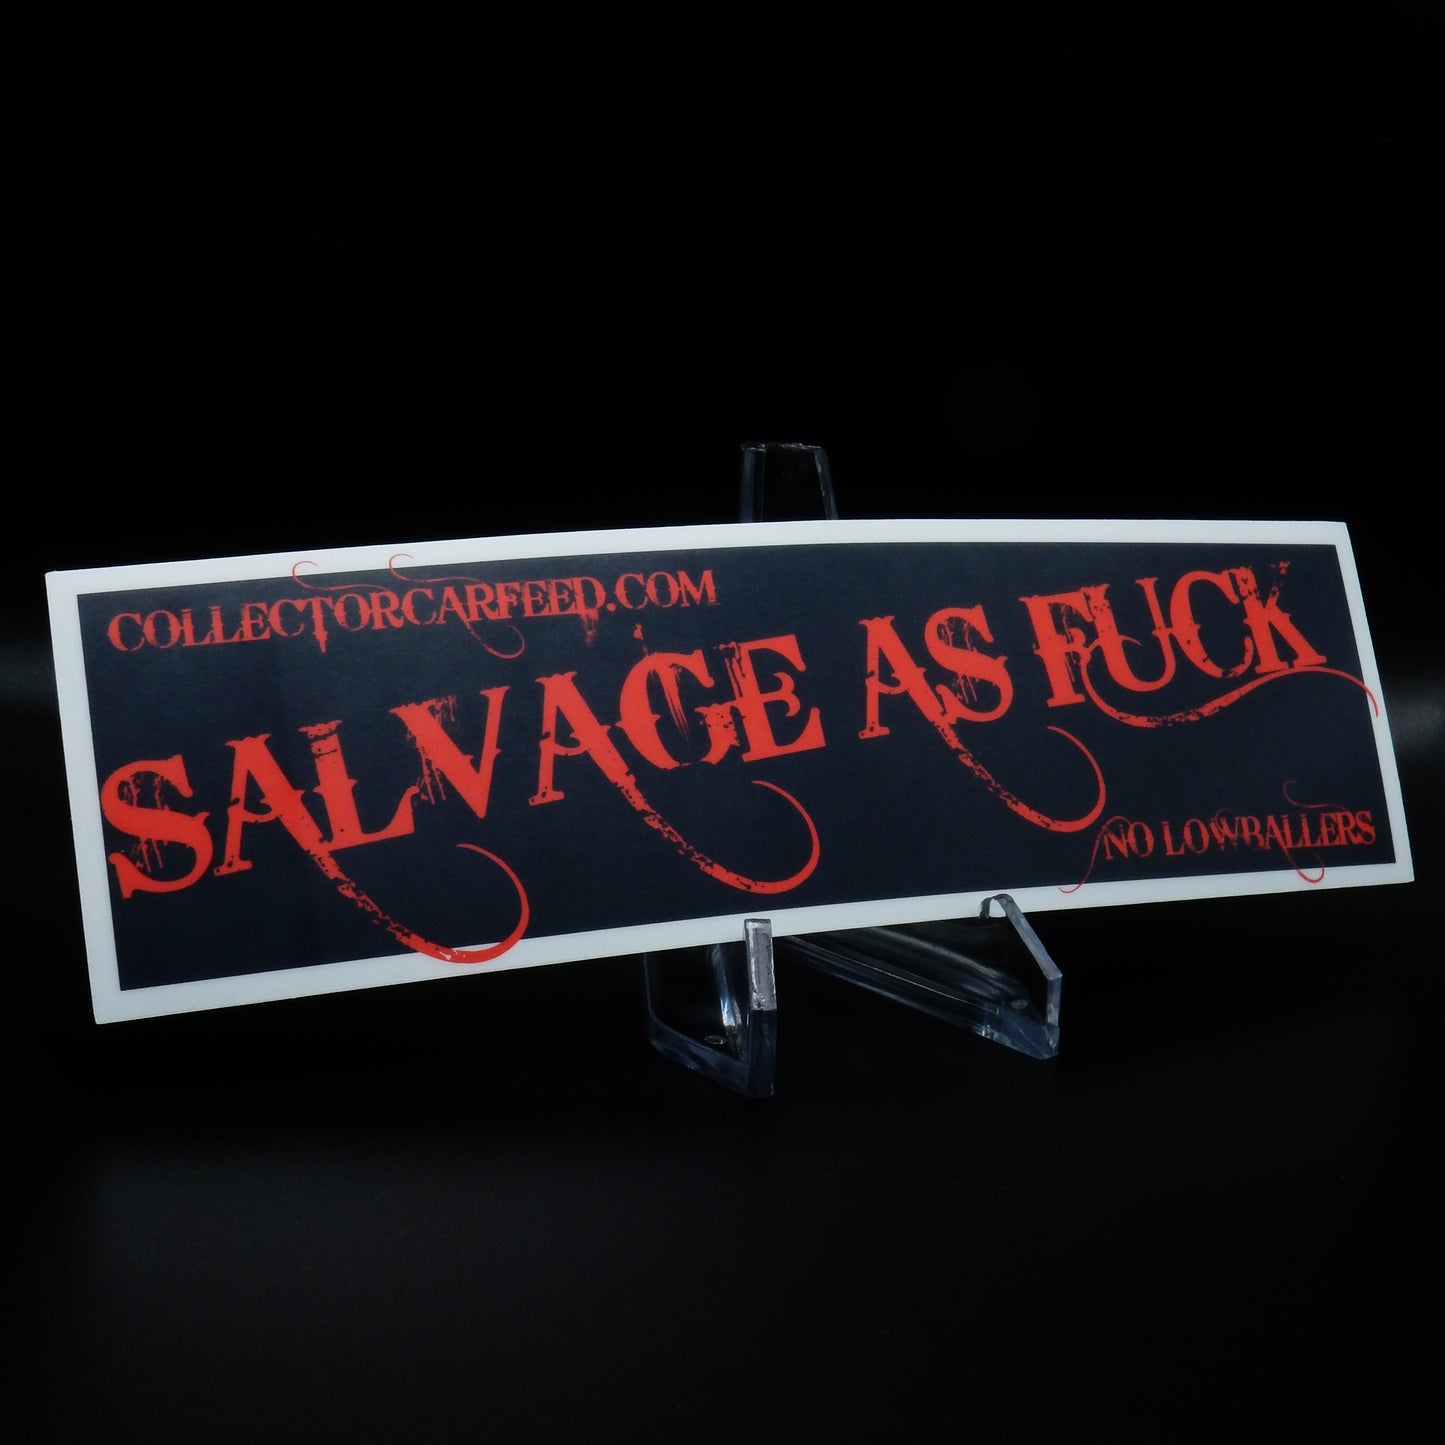 Salvage As Fr*ck Sticker